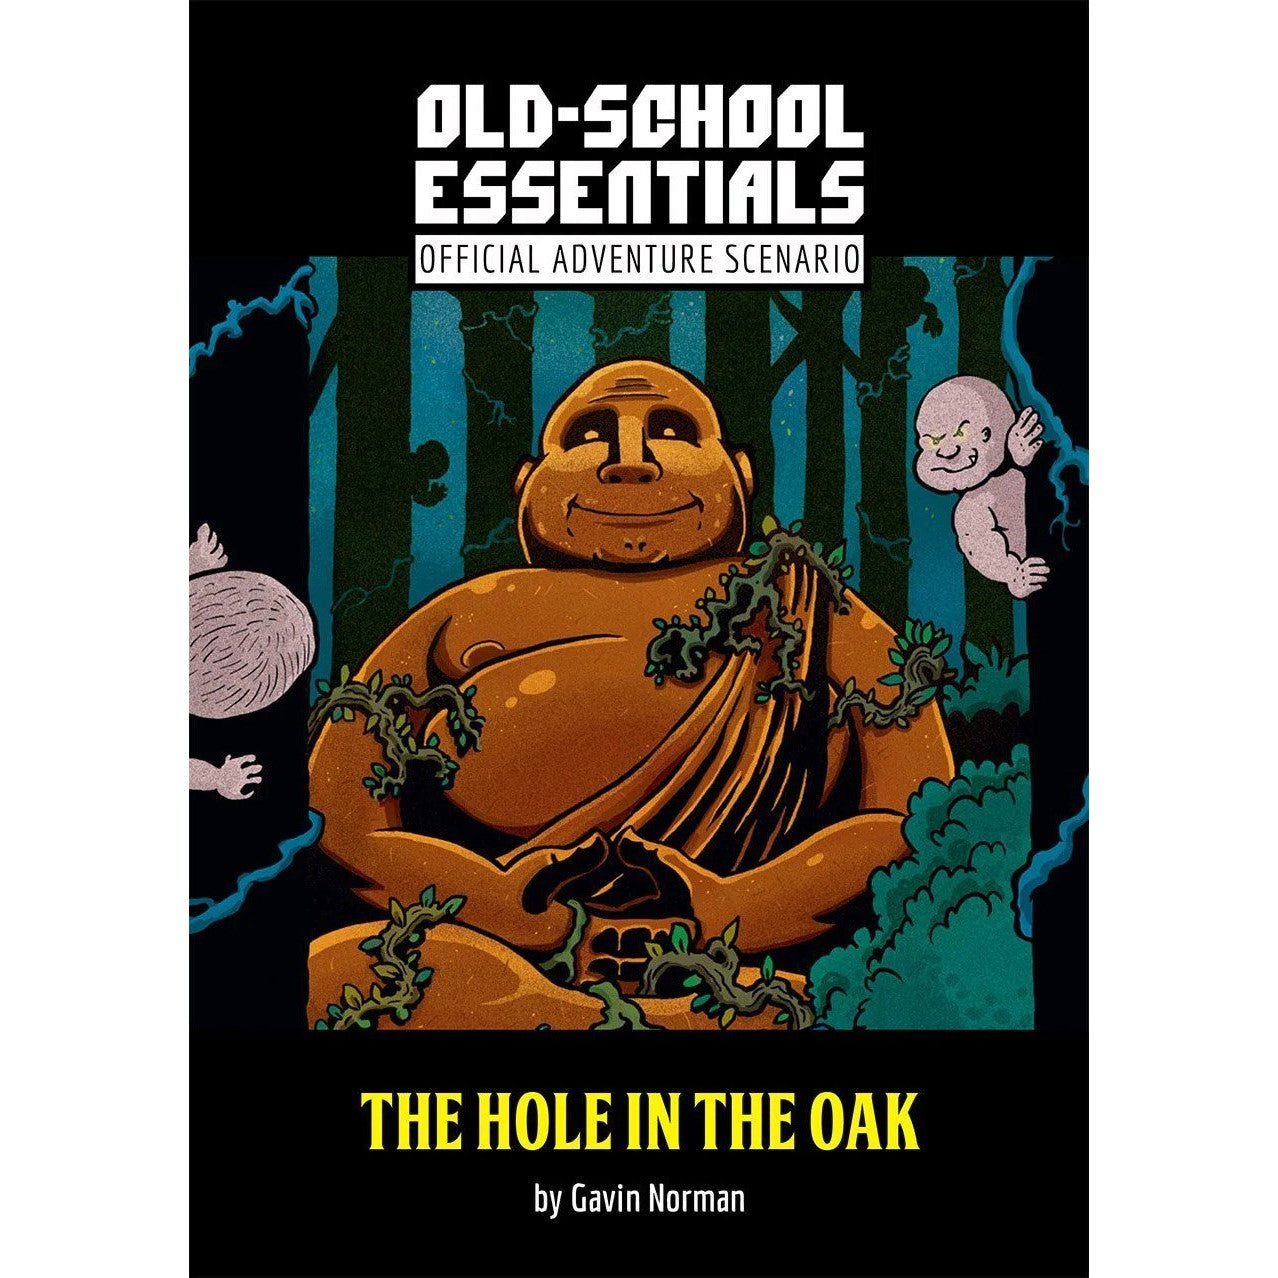 Old-School Essentials Official Adventure Scenario - The Hole In the Oak